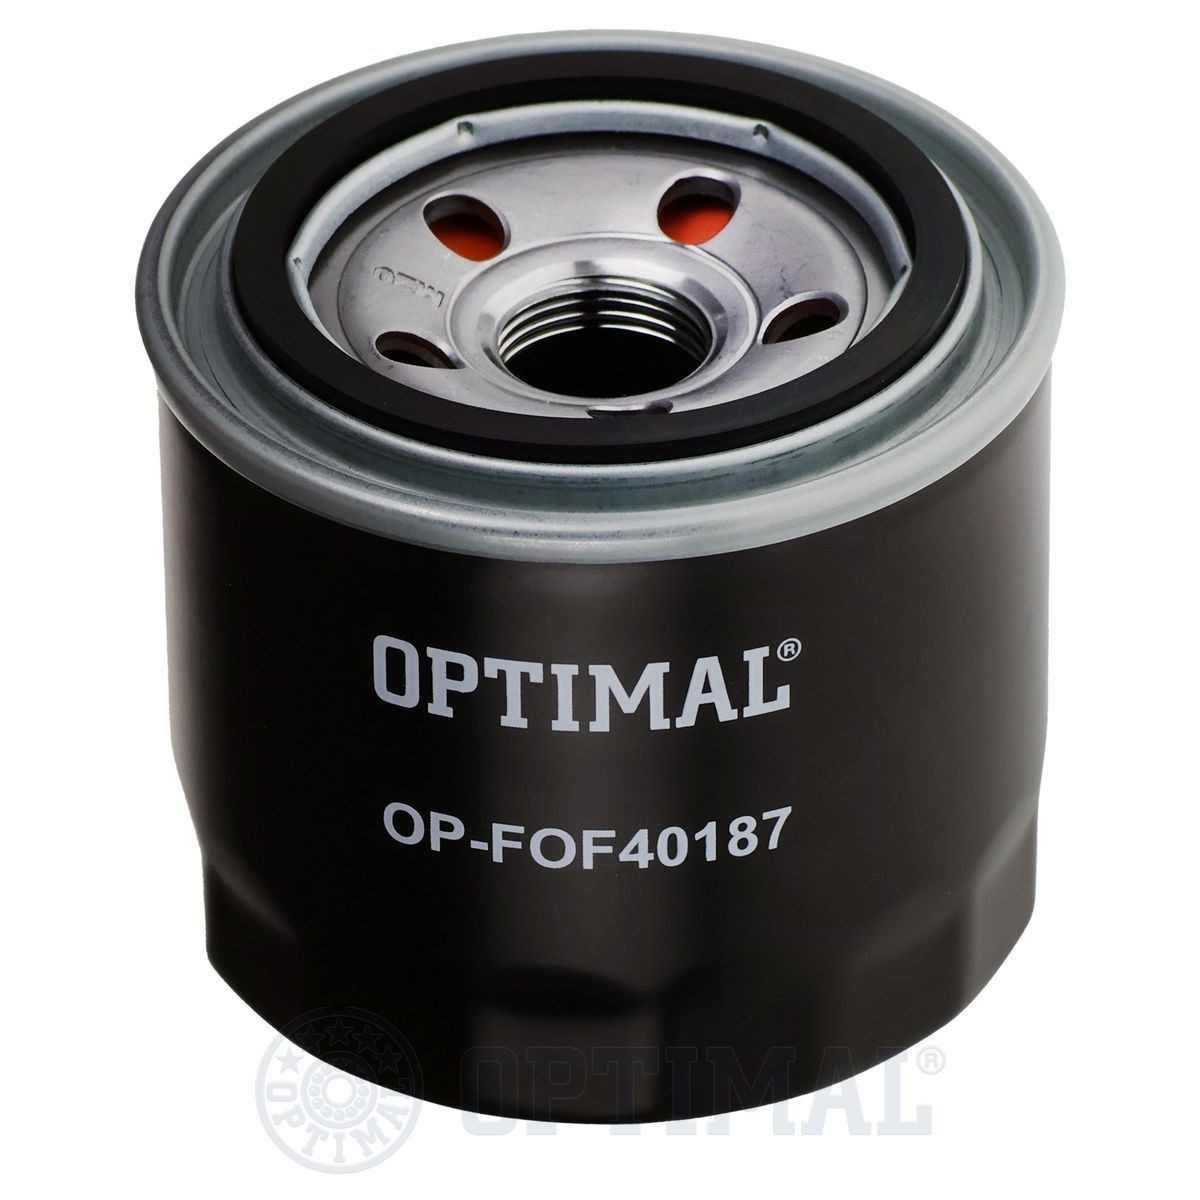 OPTIMAL OP-FOF40187 Oil filter 1 962 769 C 2